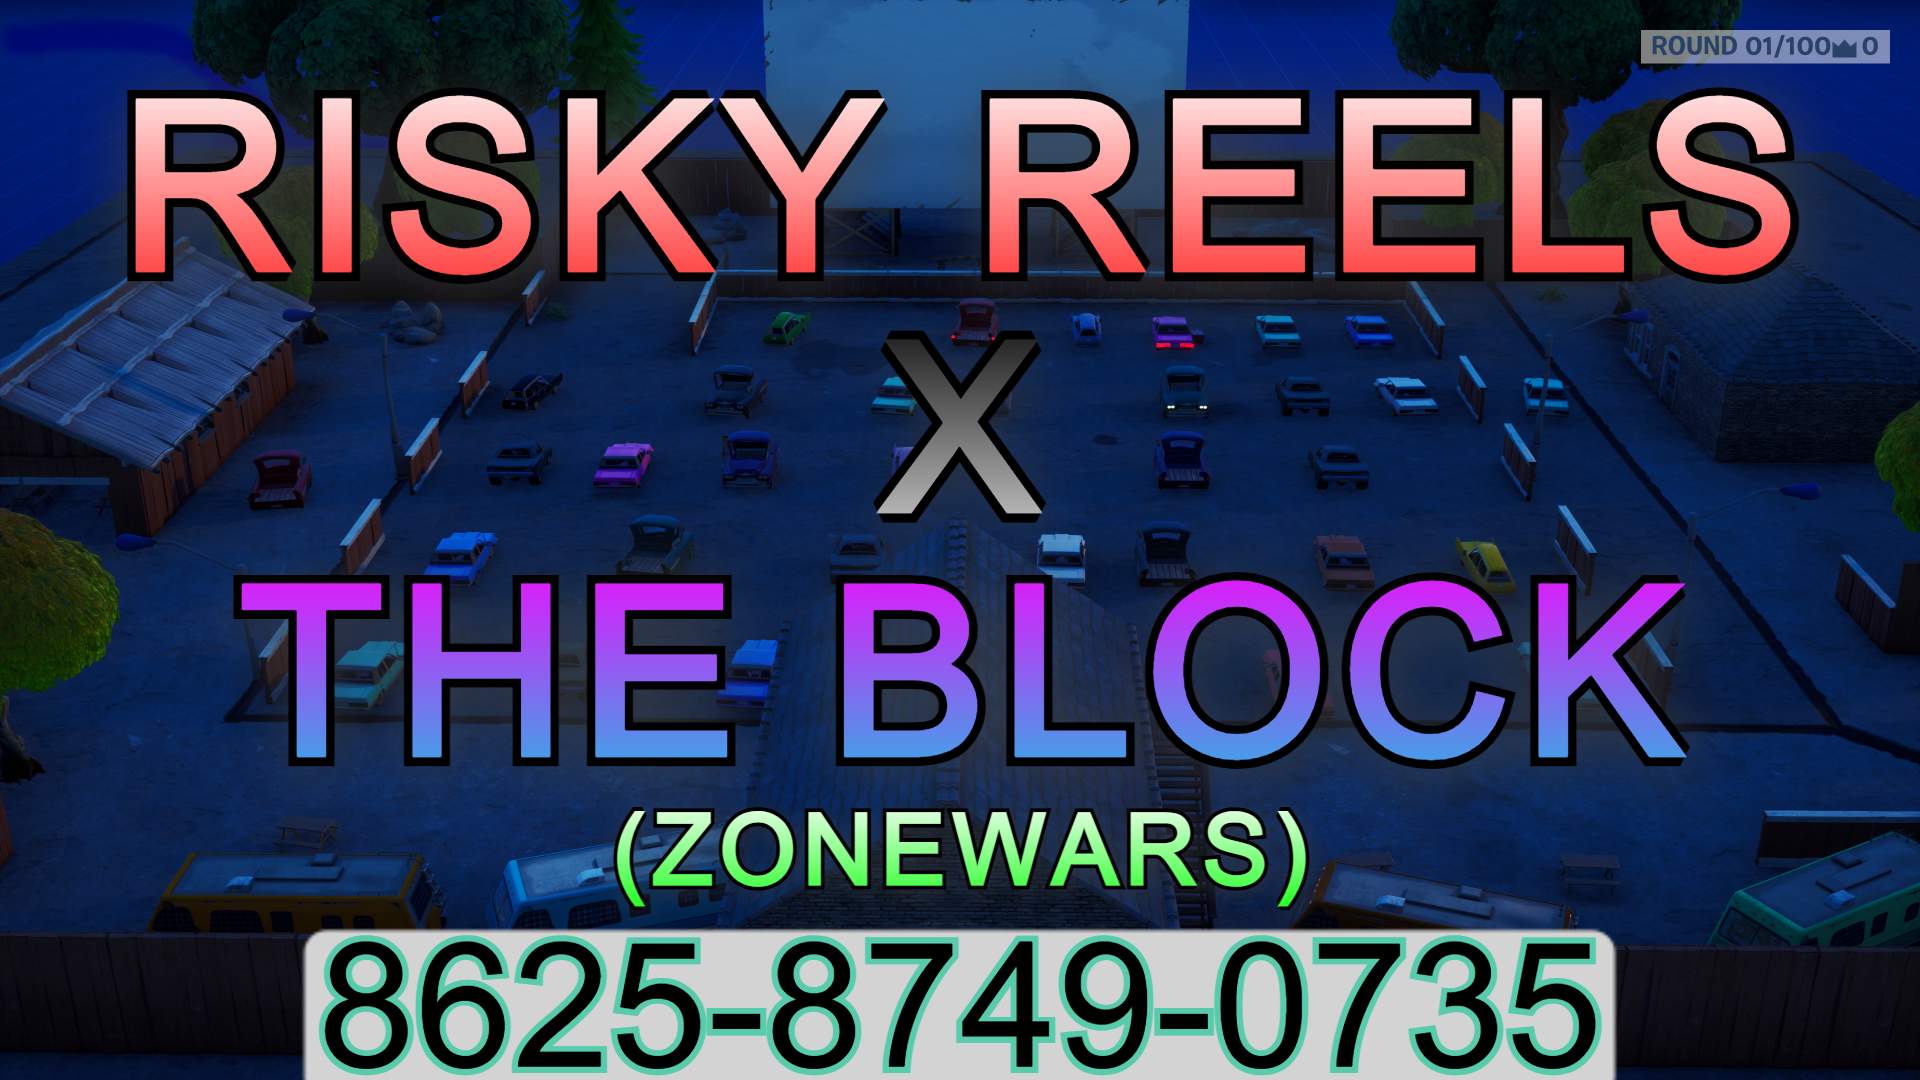 THE BLOCK X RISKY REELS ZONEWARS (XA)